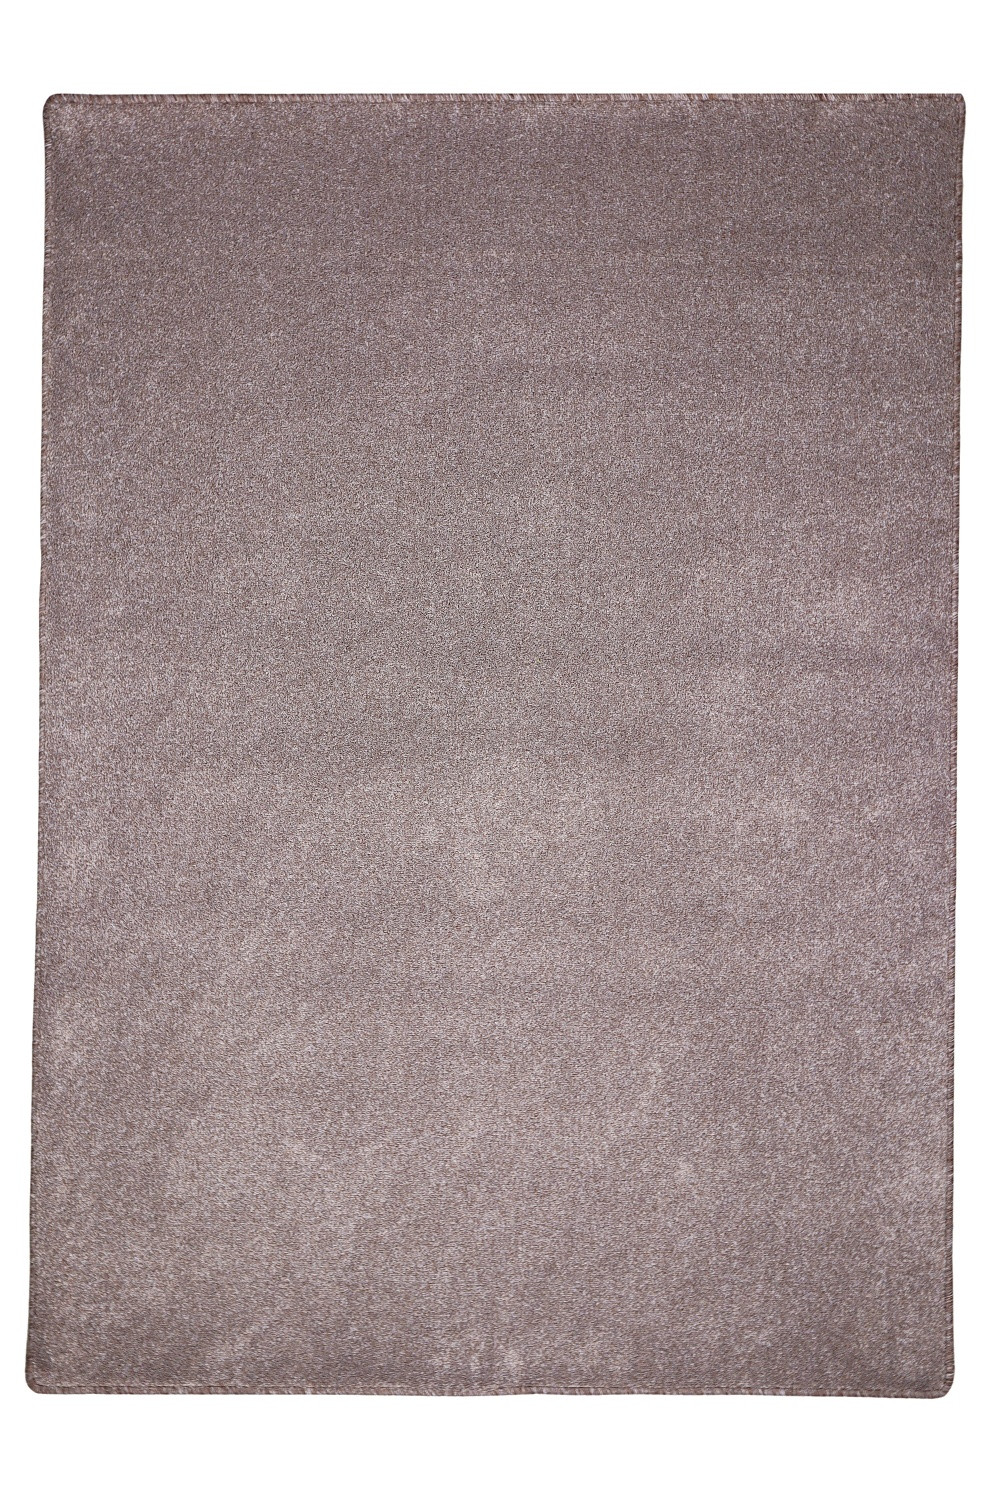 Kusový koberec Apollo Soft béžový - 60x110 cm Vopi koberce 